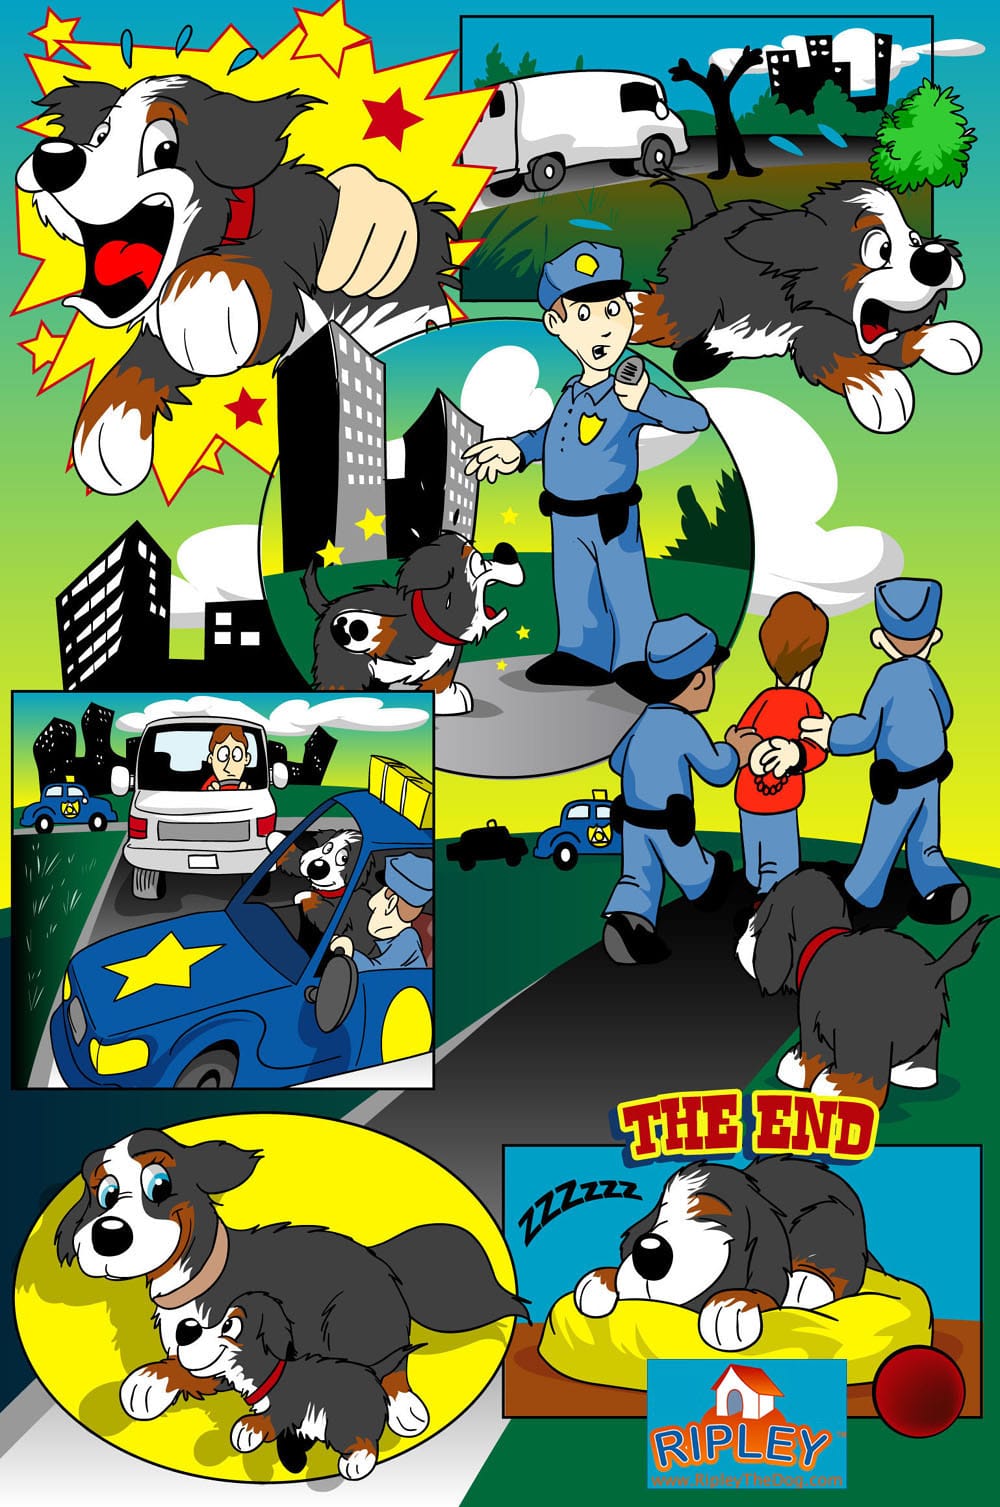 the white van ripley's comic page 2